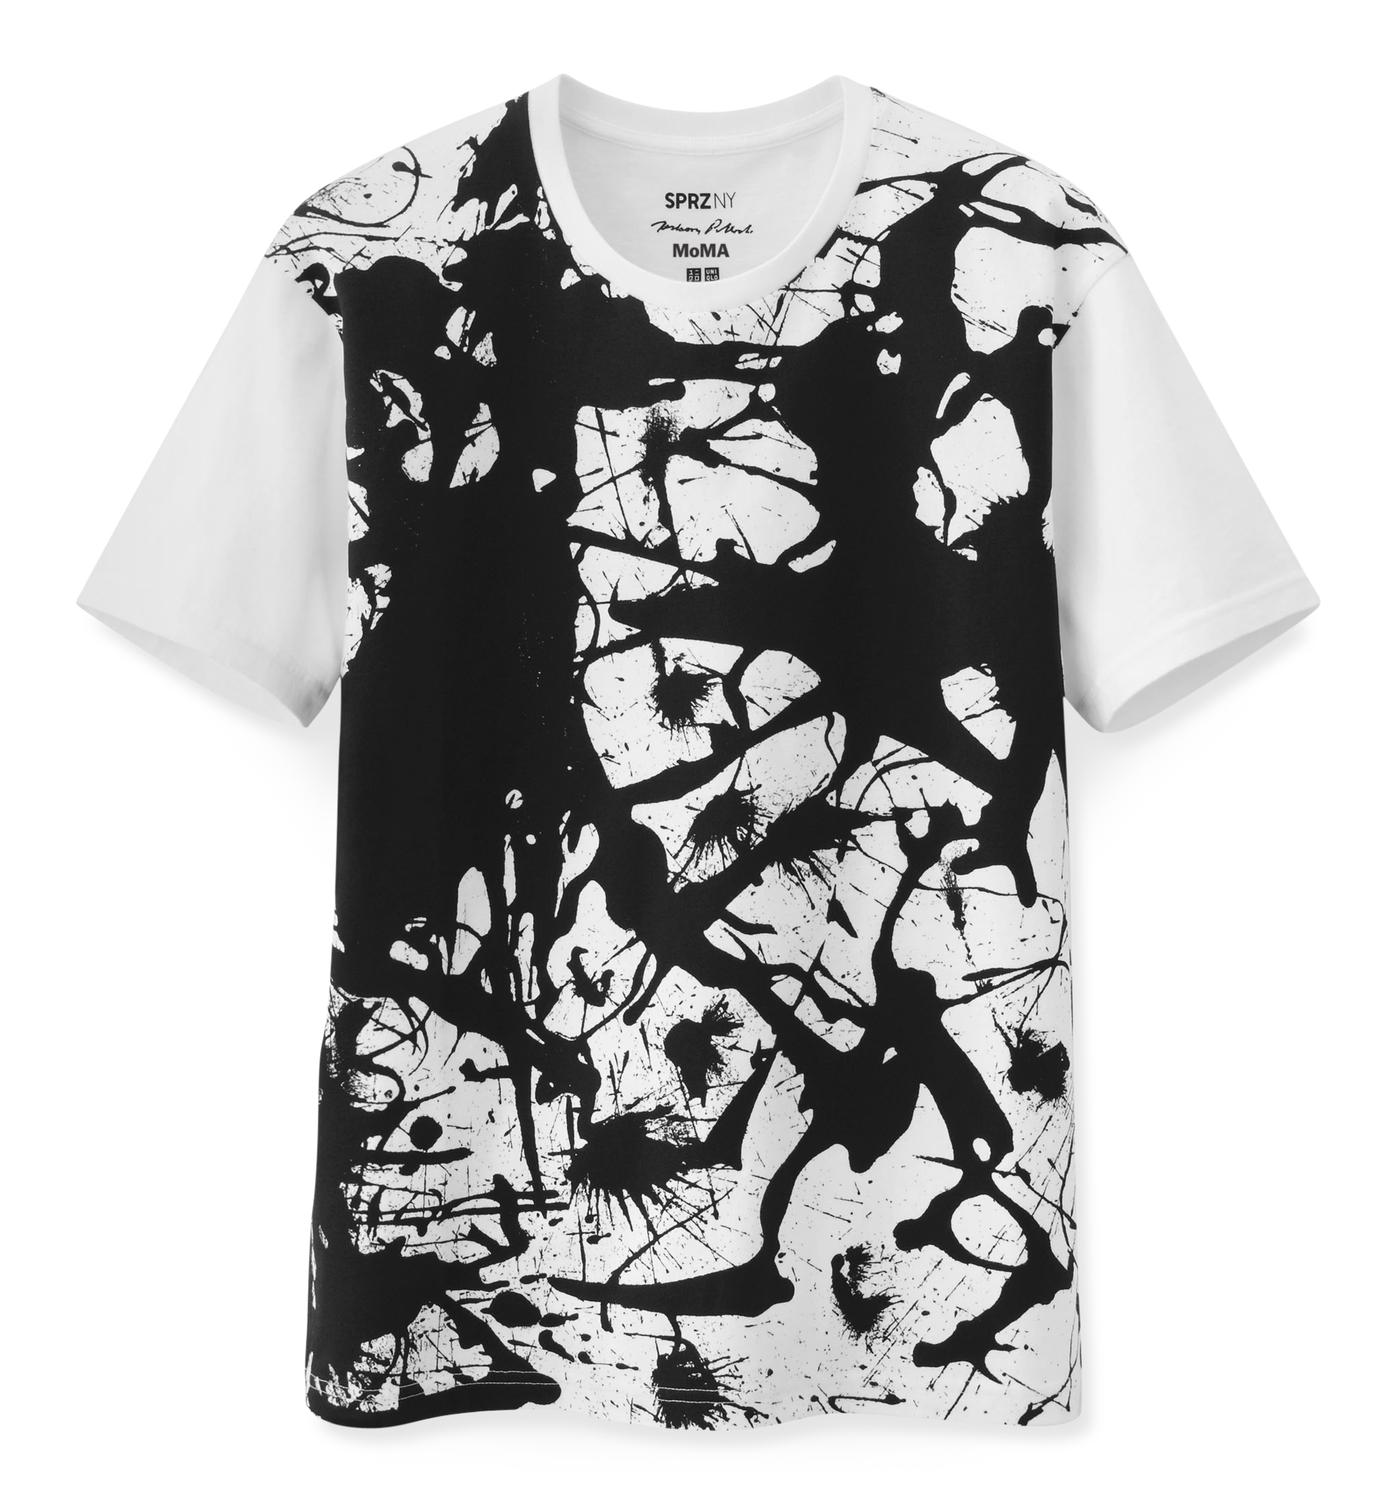 Pollock on Uniqlo T-Shirts: Appalling or Perfect? | WNYC | New York ...